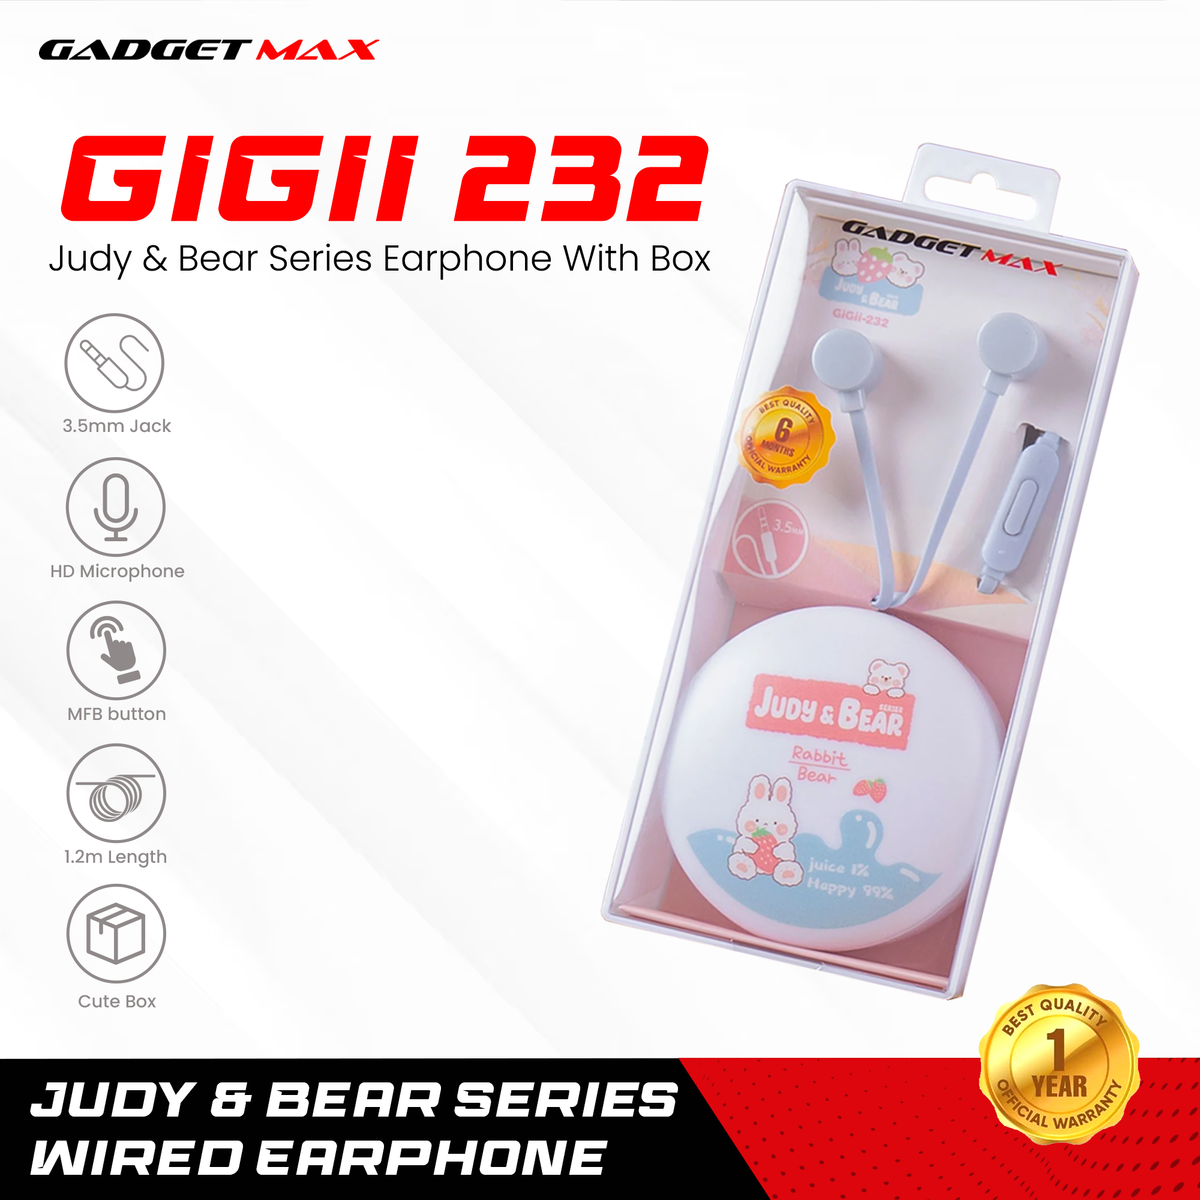 GADGET MAX GIGI-232 JUDY&BEAR SERIES 3.5 MM WIRED EARPHONE - BLUE